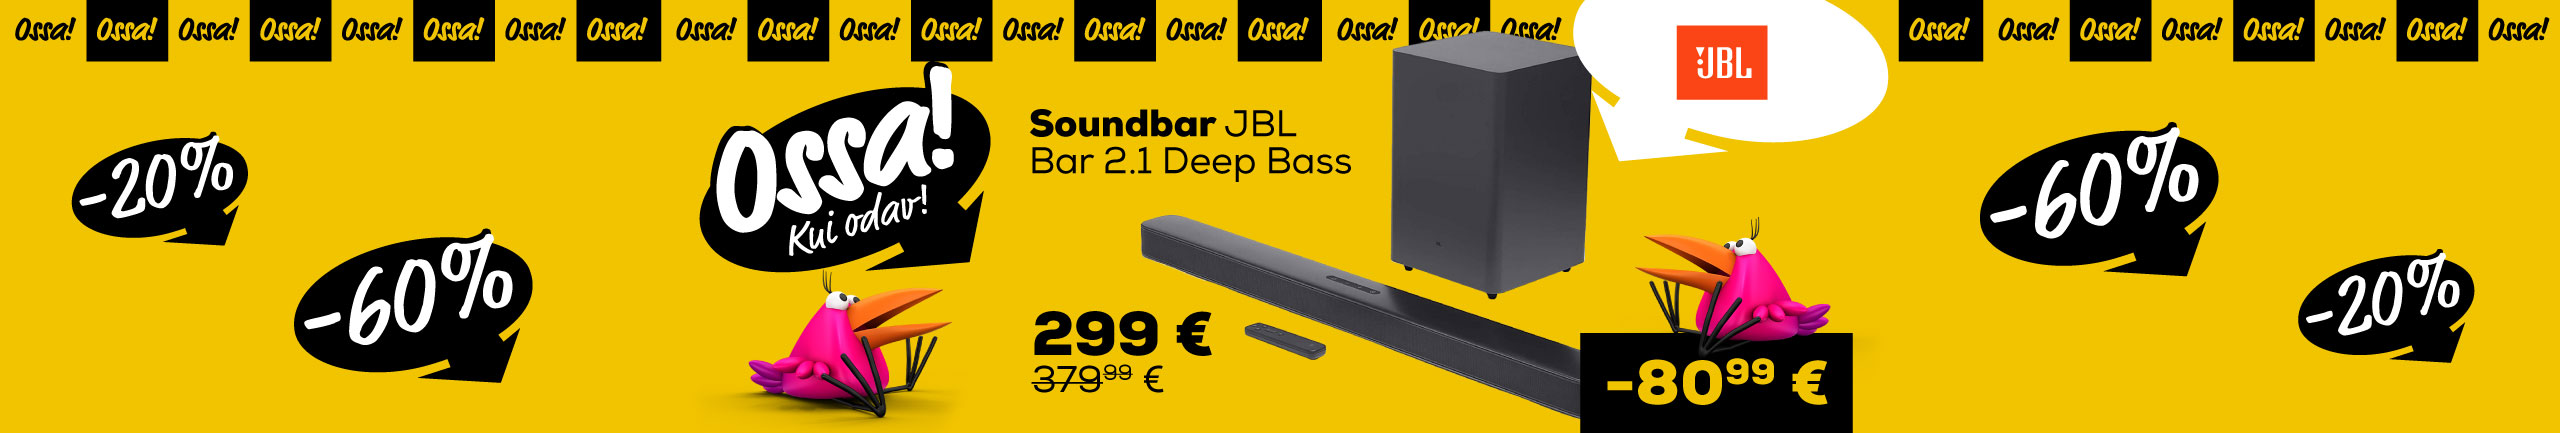 NPL Ossa extended! We added new products! Soundbar JBL Bar 2.1 Deep Bas